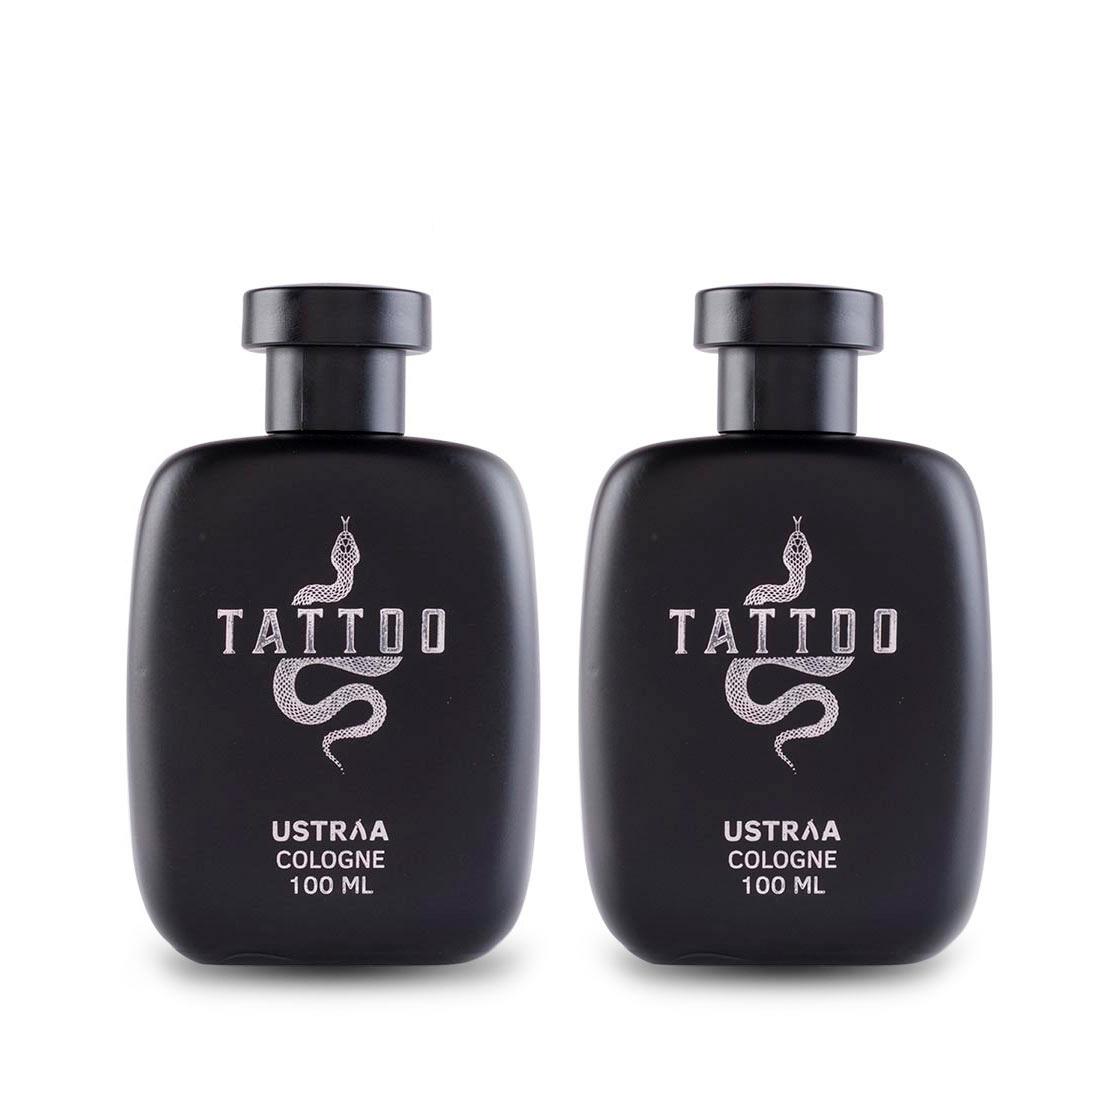 USTRAA Cologne Tattoo 100 ml Perfume for Men pack of 2 - RUBNIC